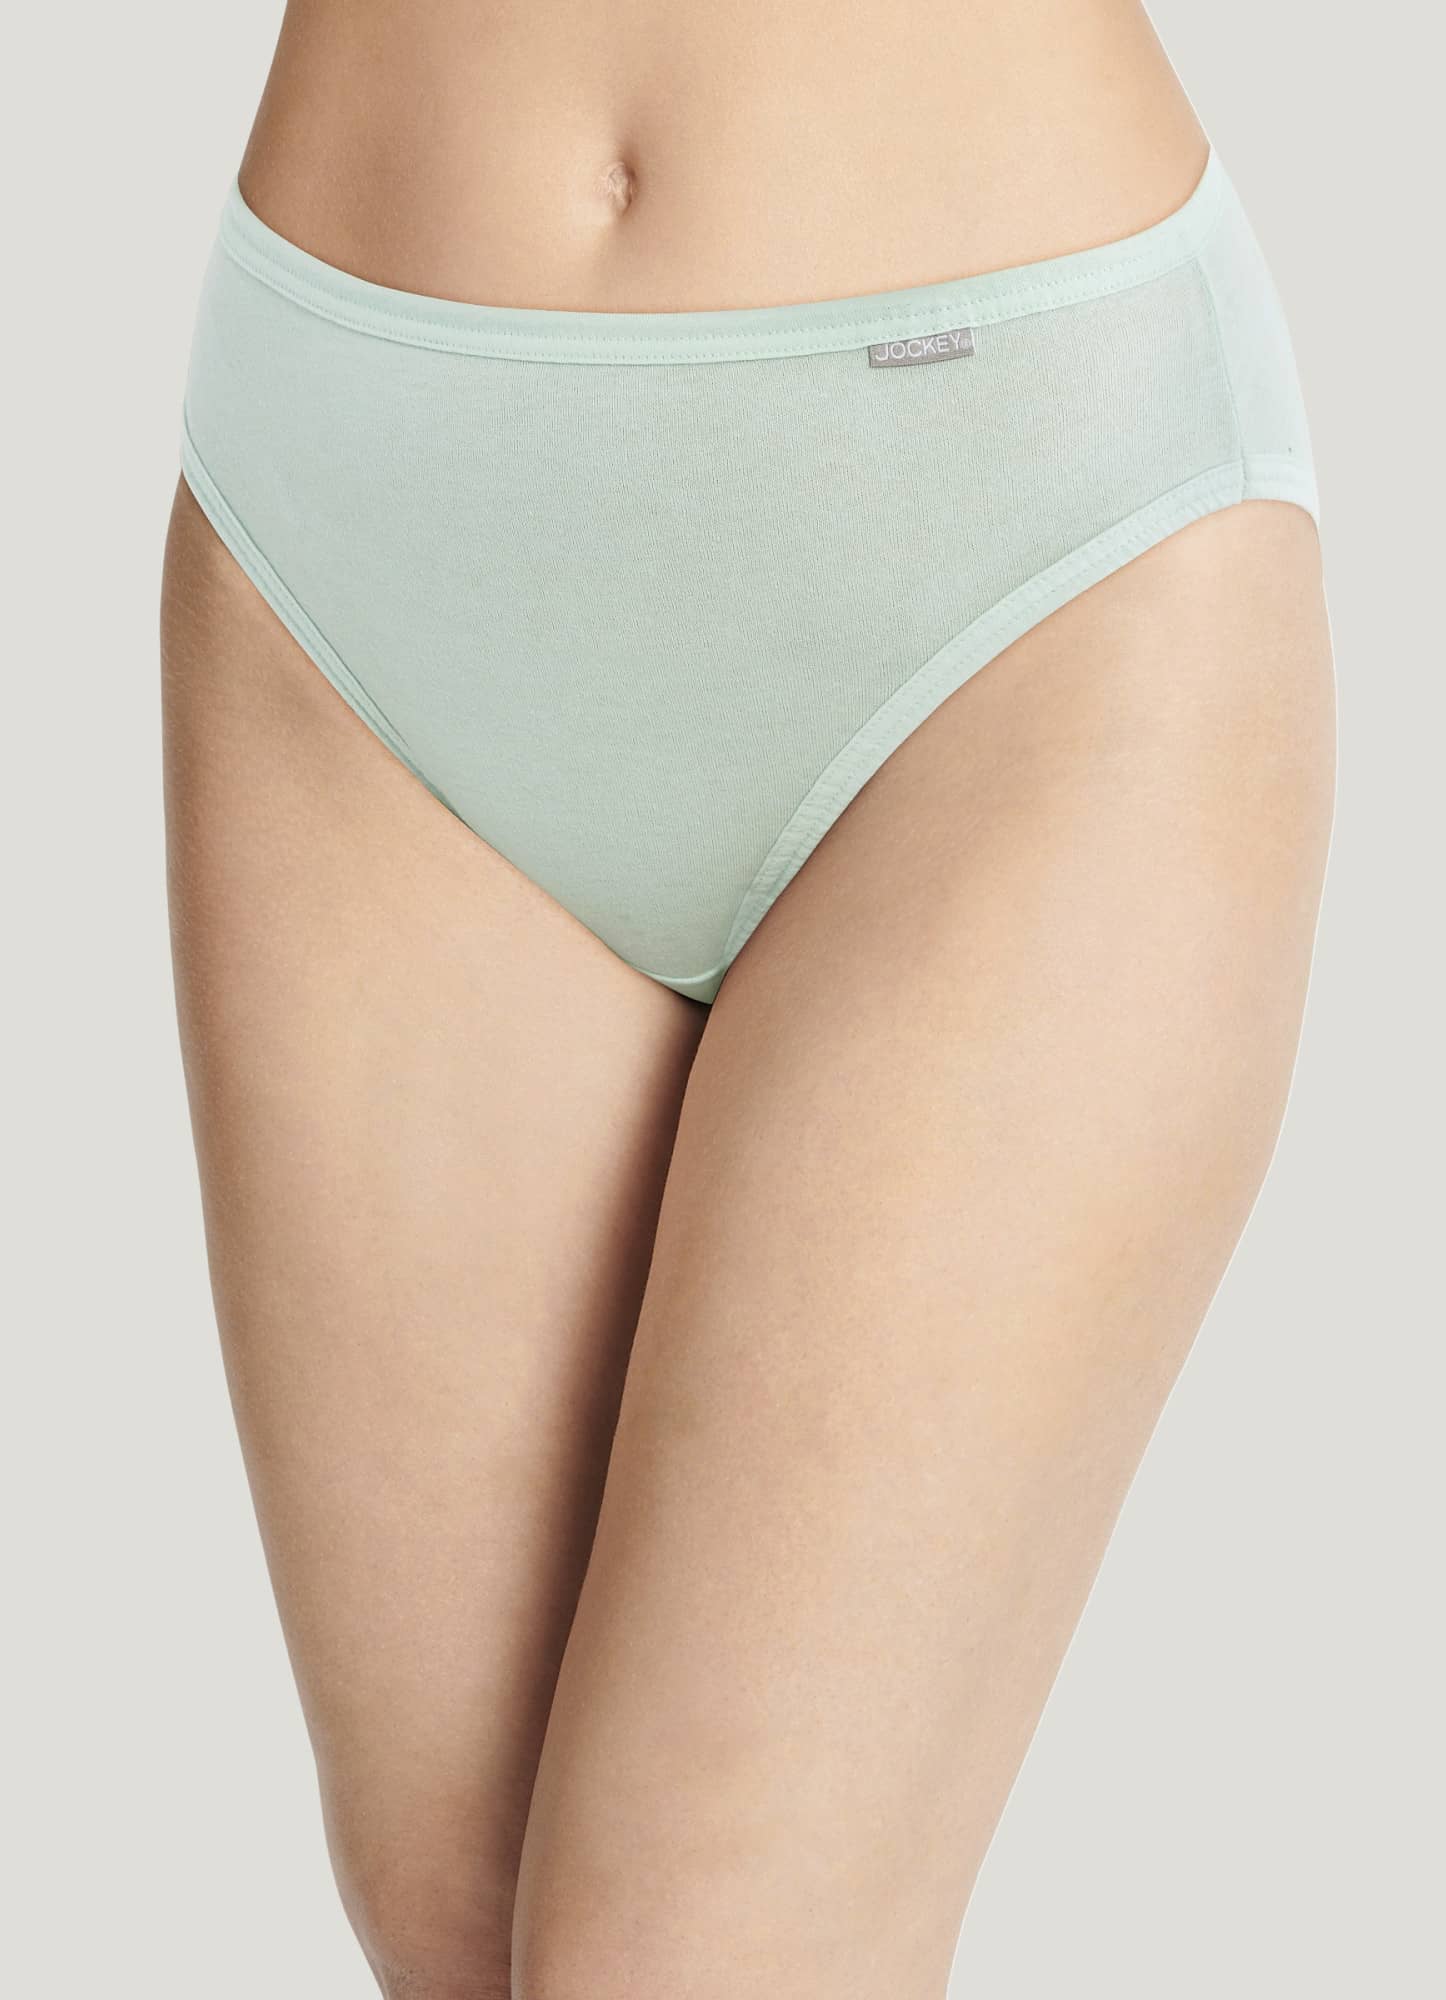 Women'S Panties,Ladies French Cut Hi Cut Panties For Summer Women Underwear